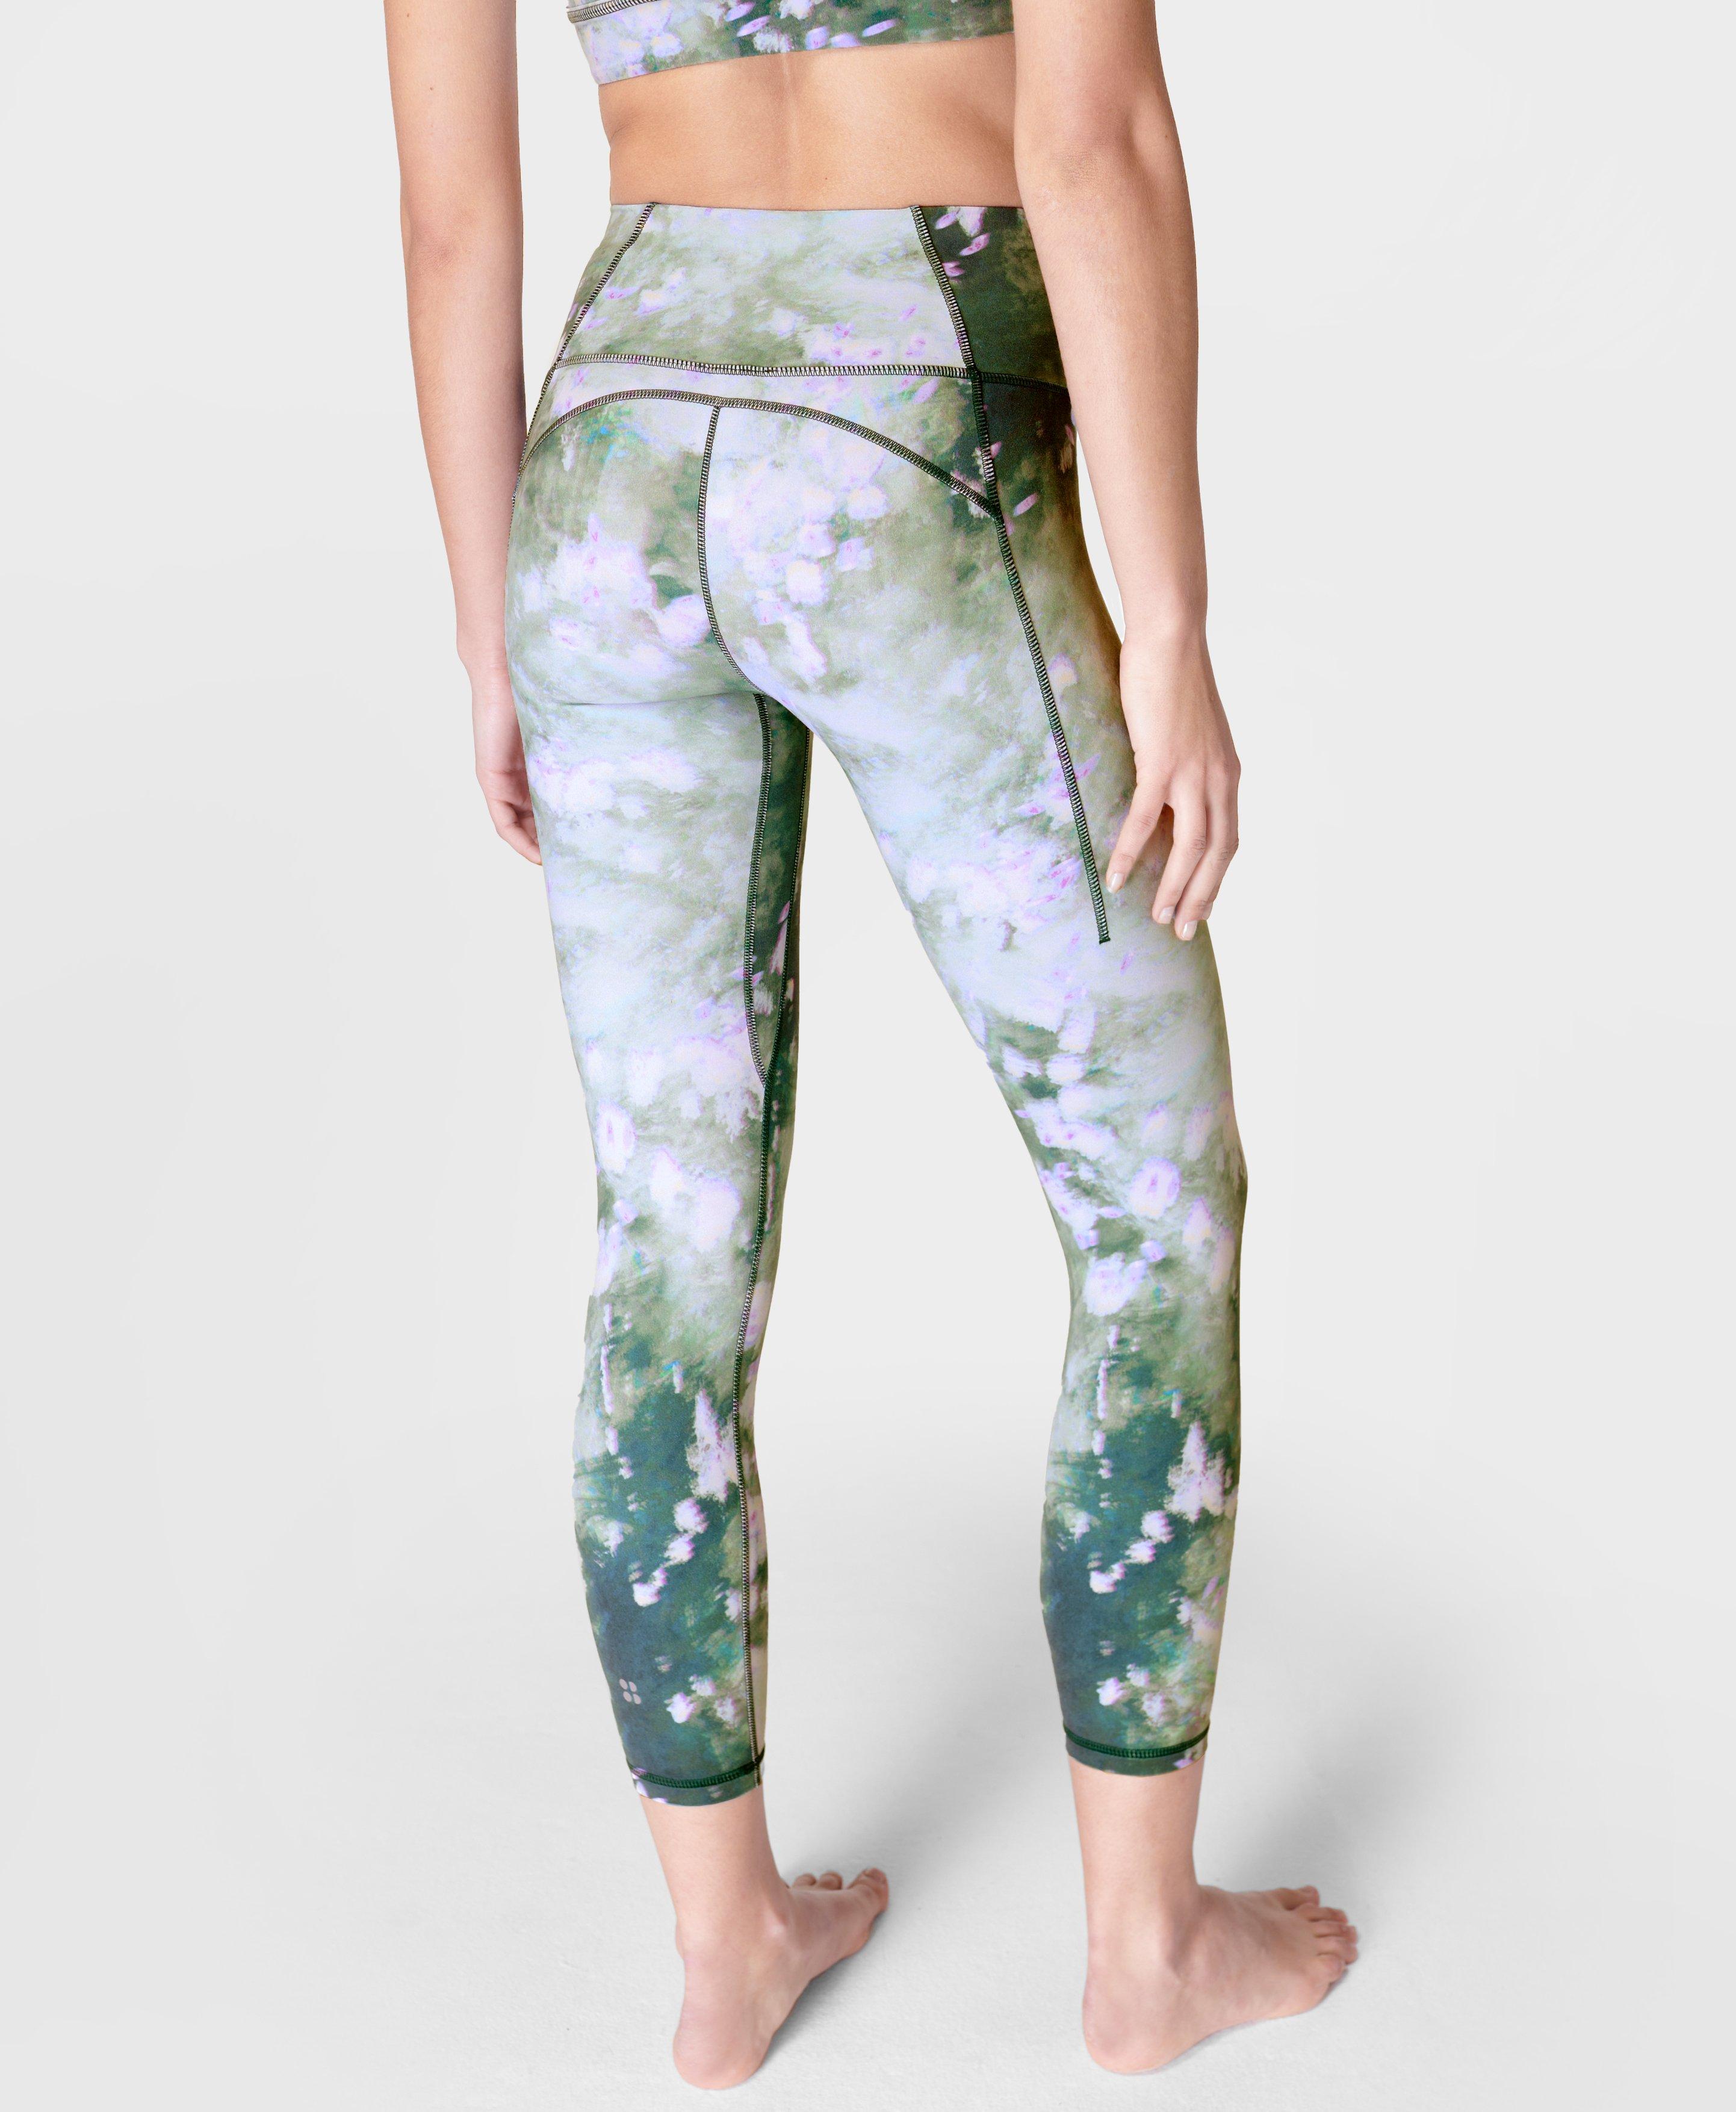 Super Soft Yoga Leggings - Green Lavender Meadow Print, Women's Leggings